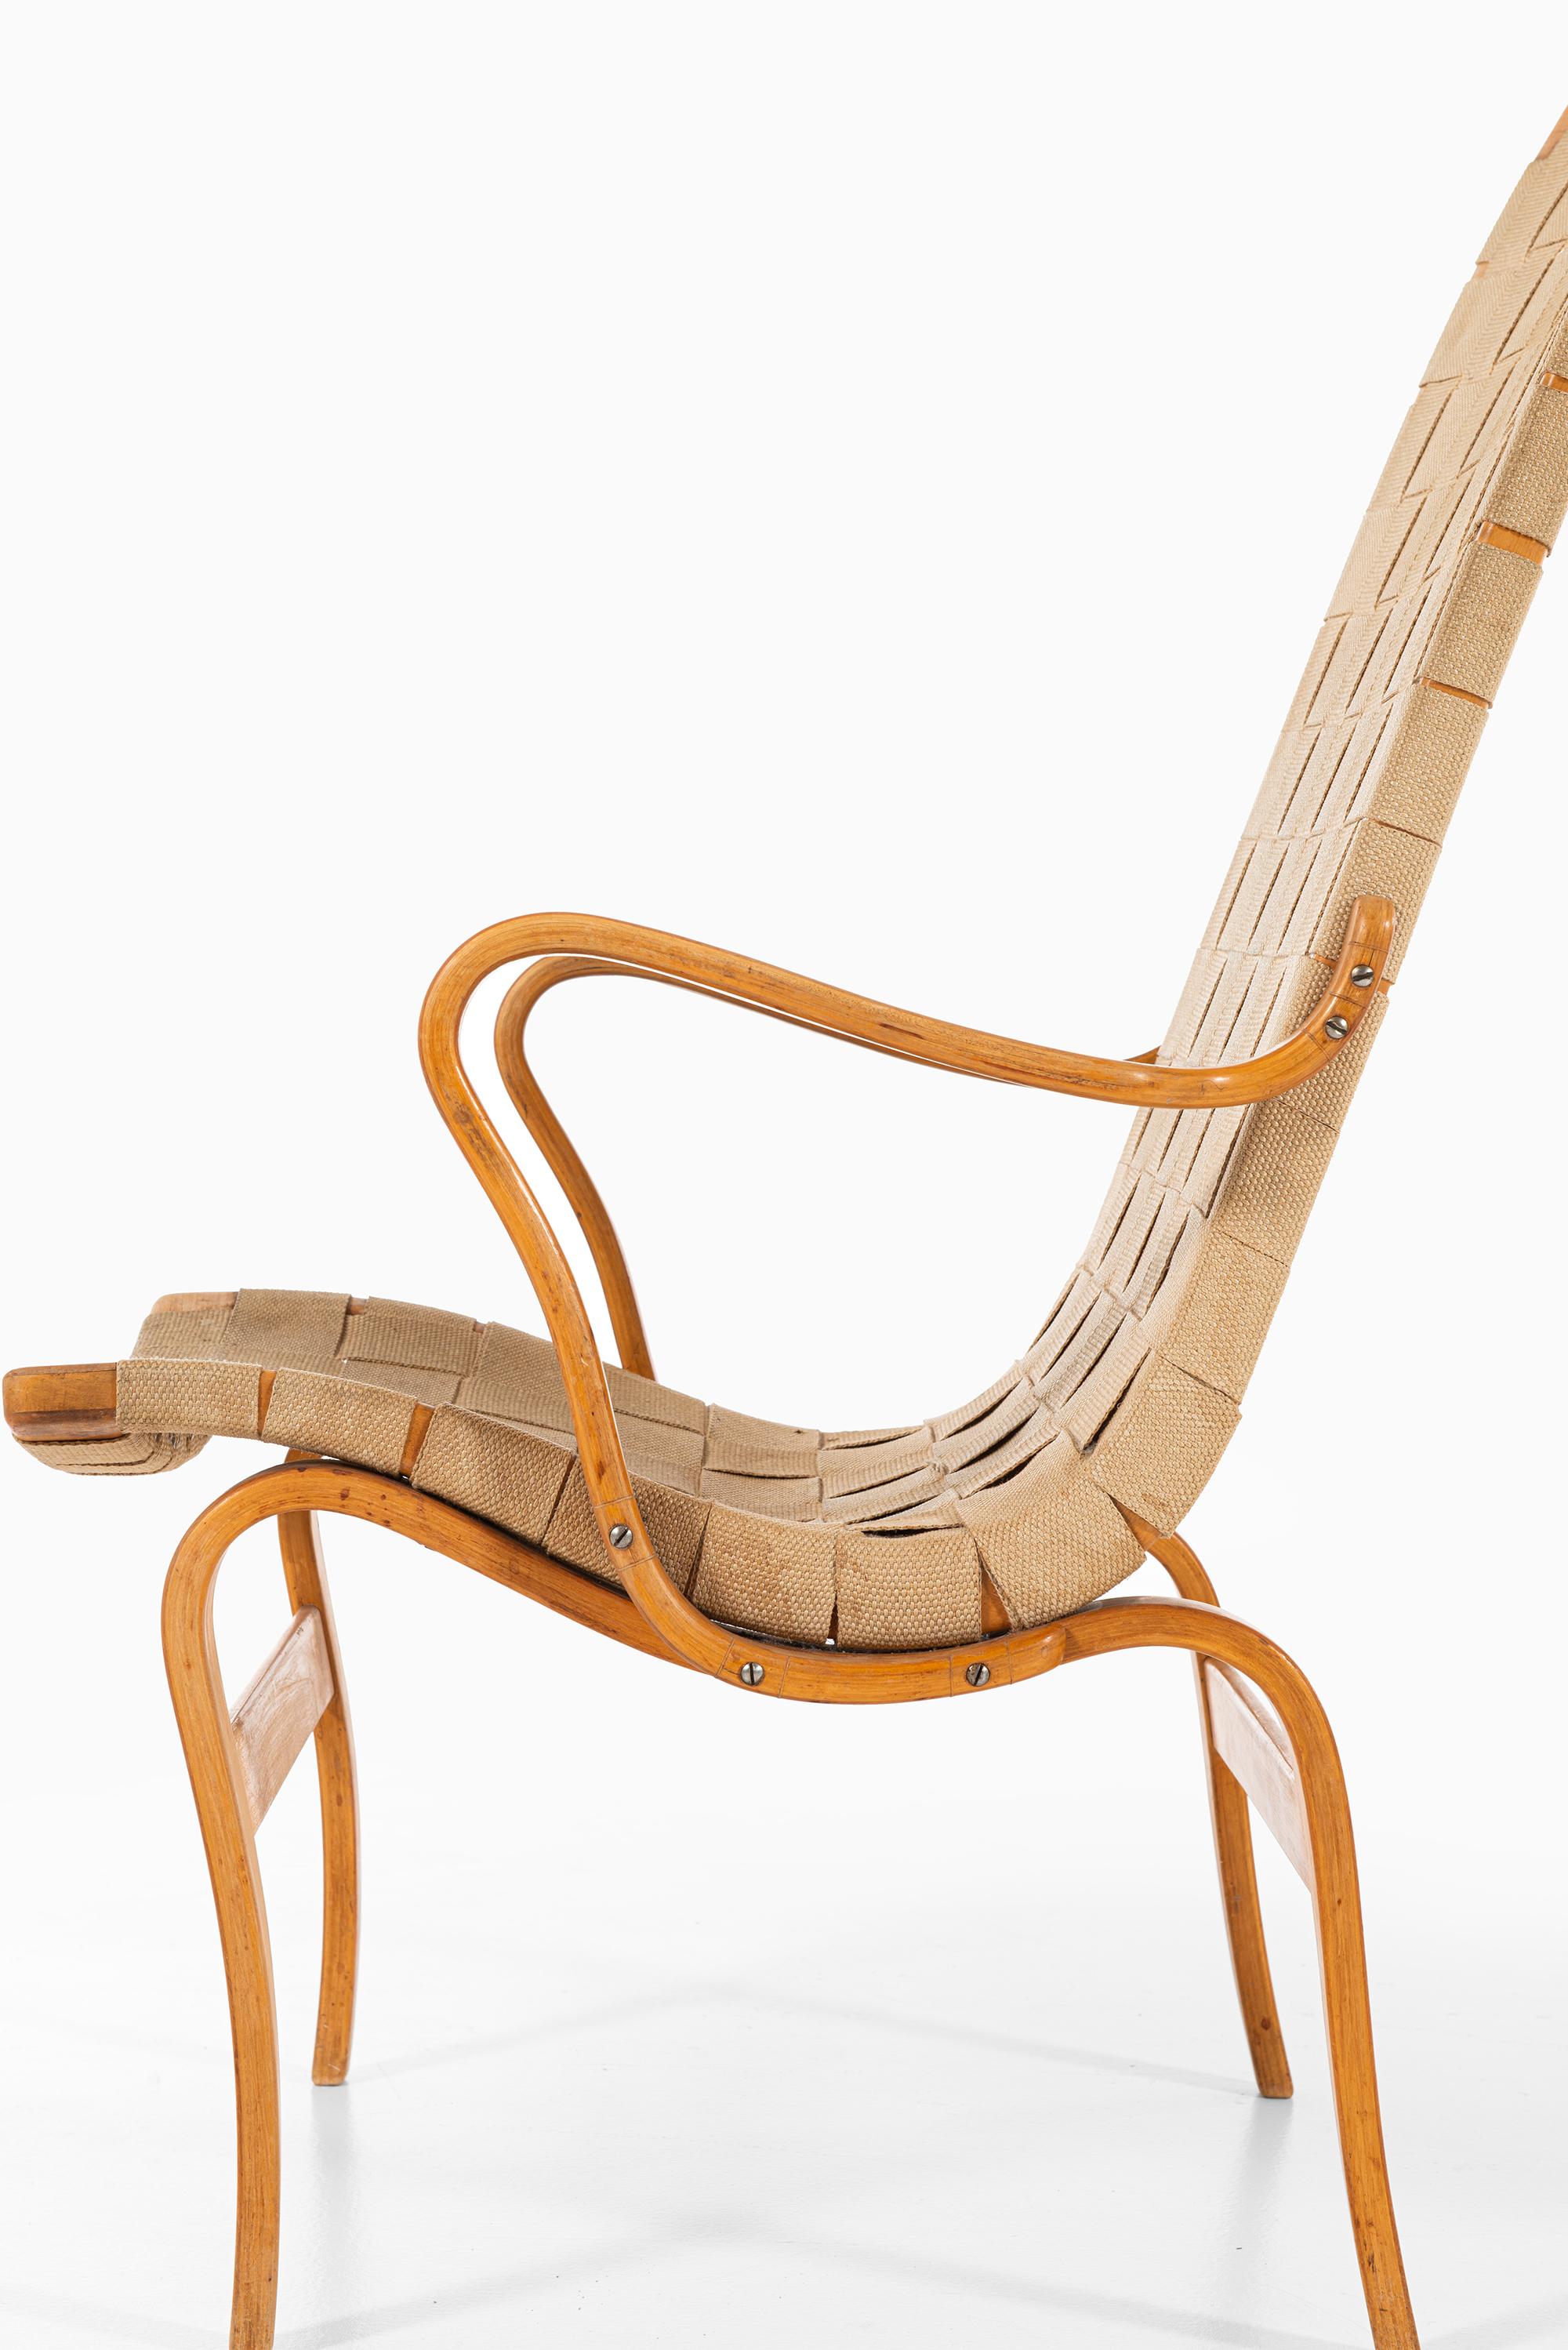 Early easy chair model Eva hög designed by Bruno Mathsson. Produced by Karl Mathsson in Värnamo, Sweden.